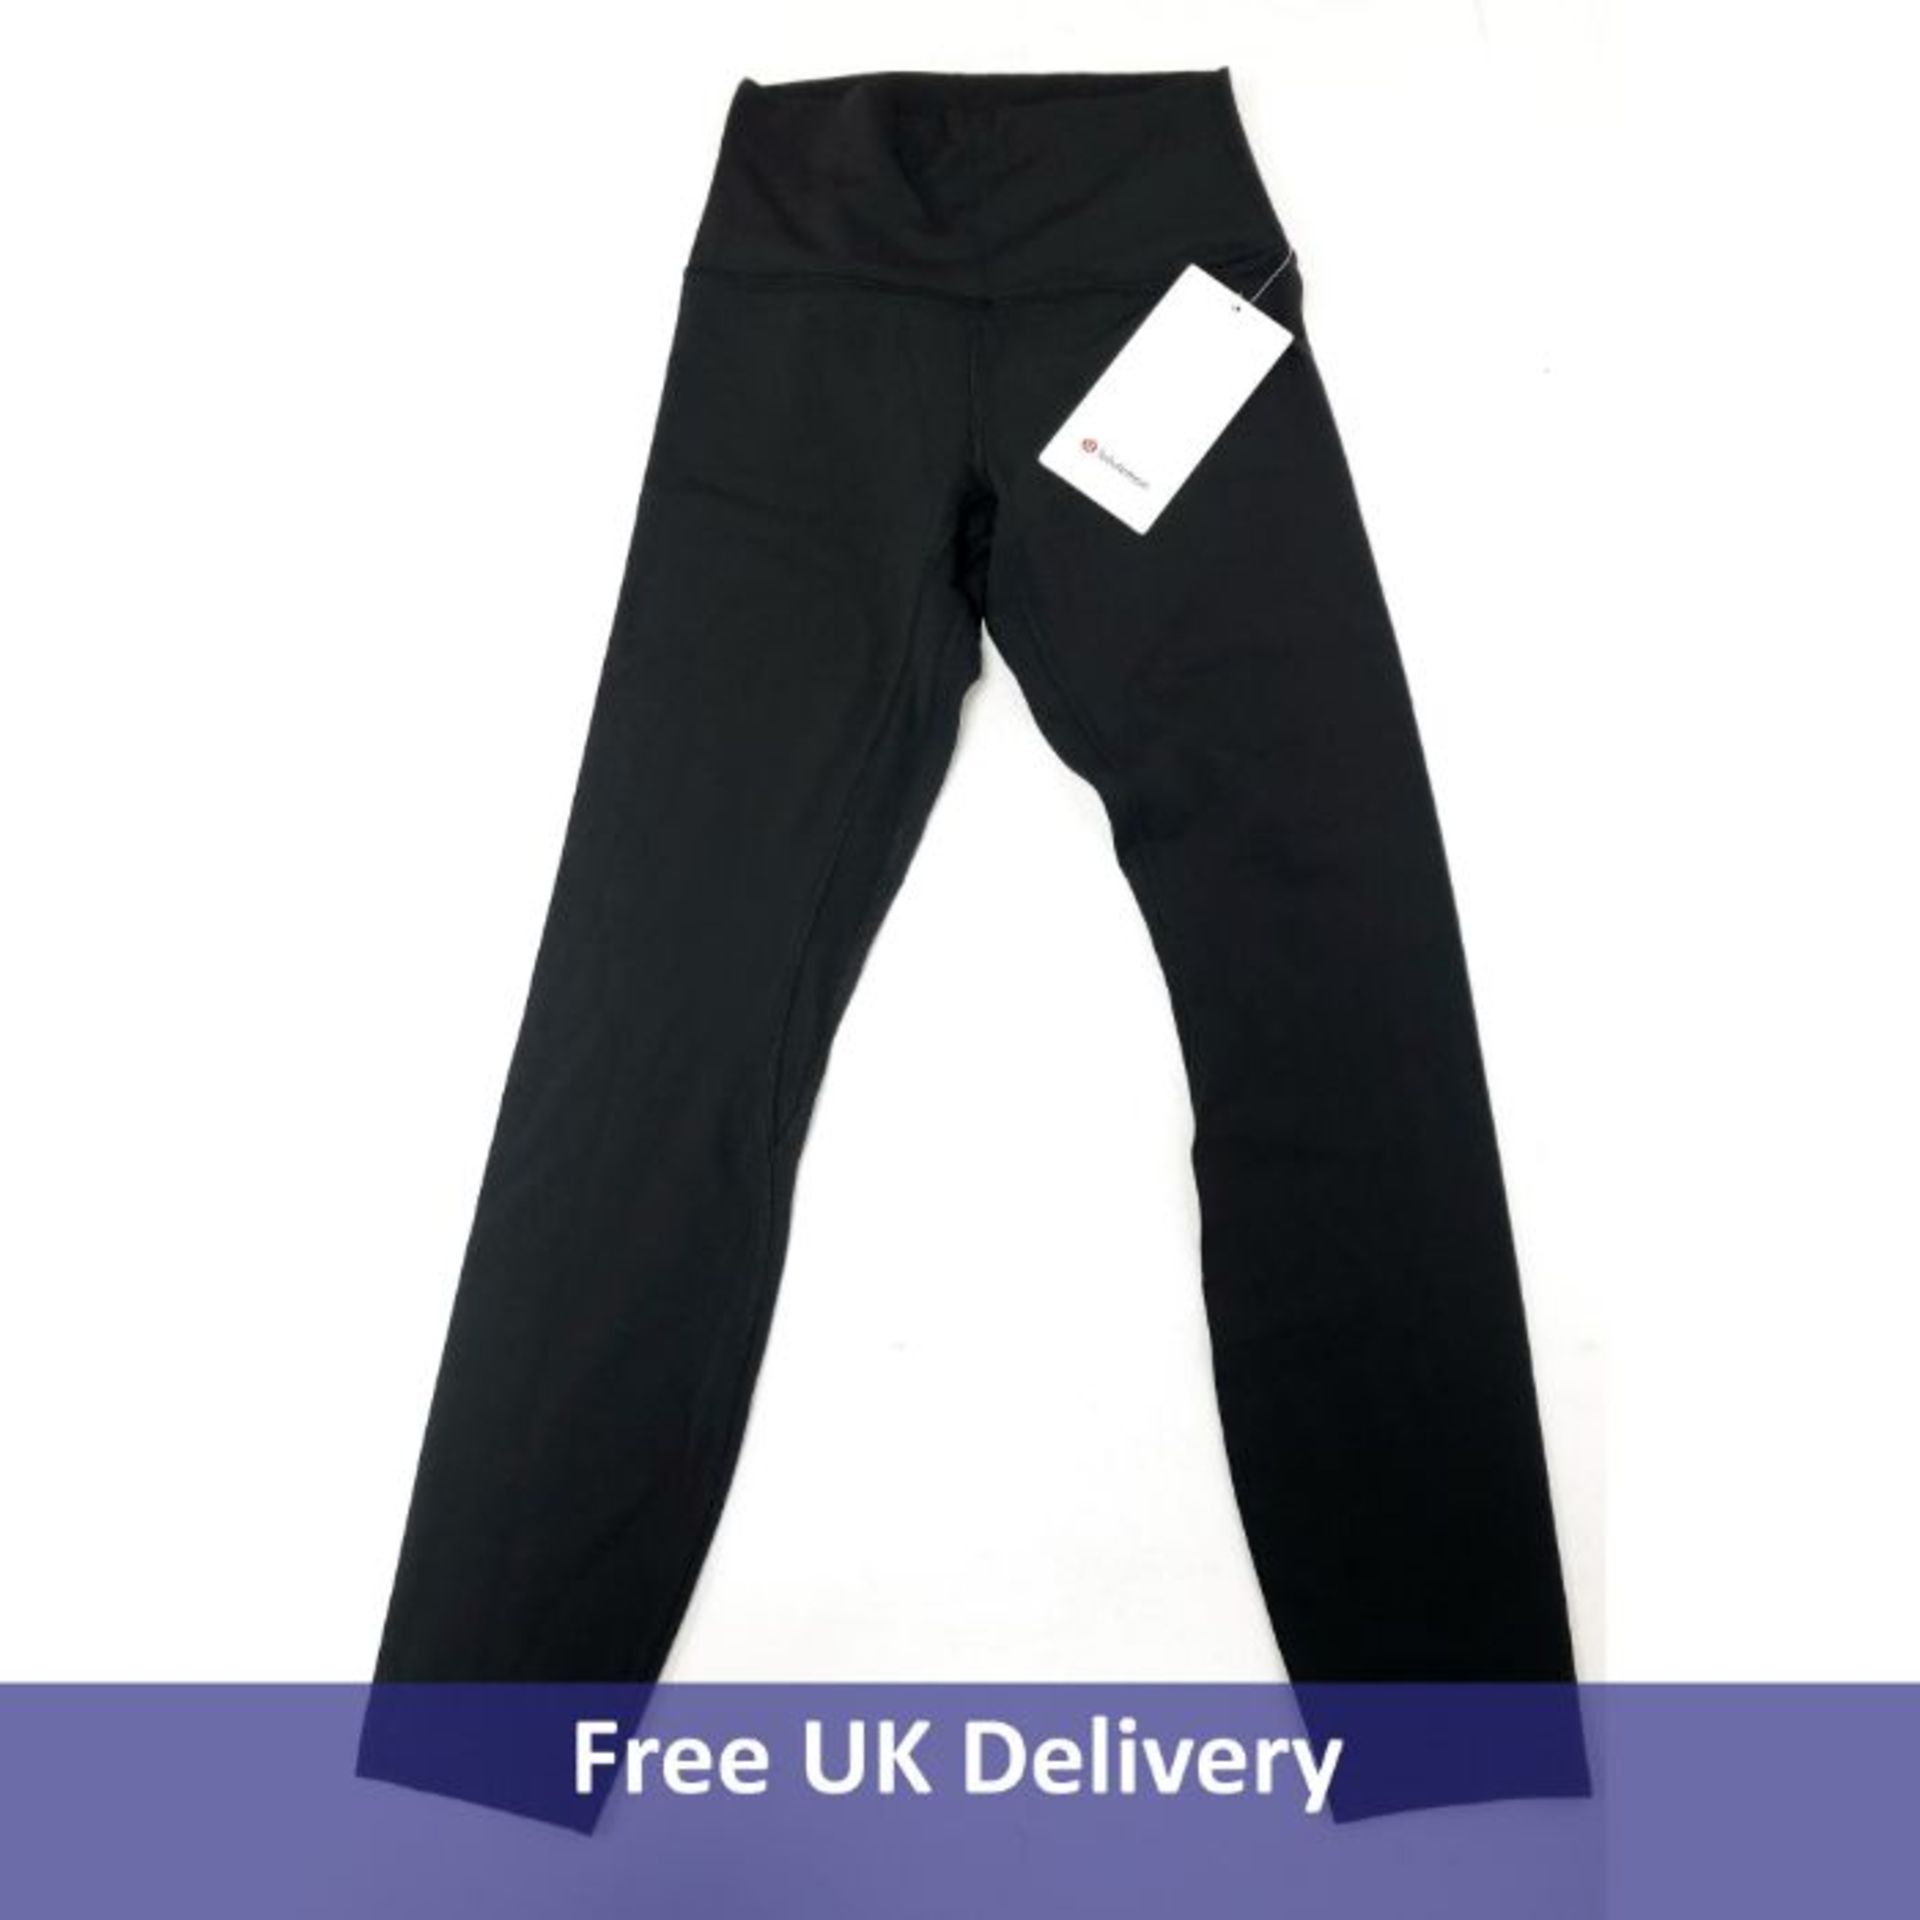 Lululemon Align HR Pants 25", Black, UK 4